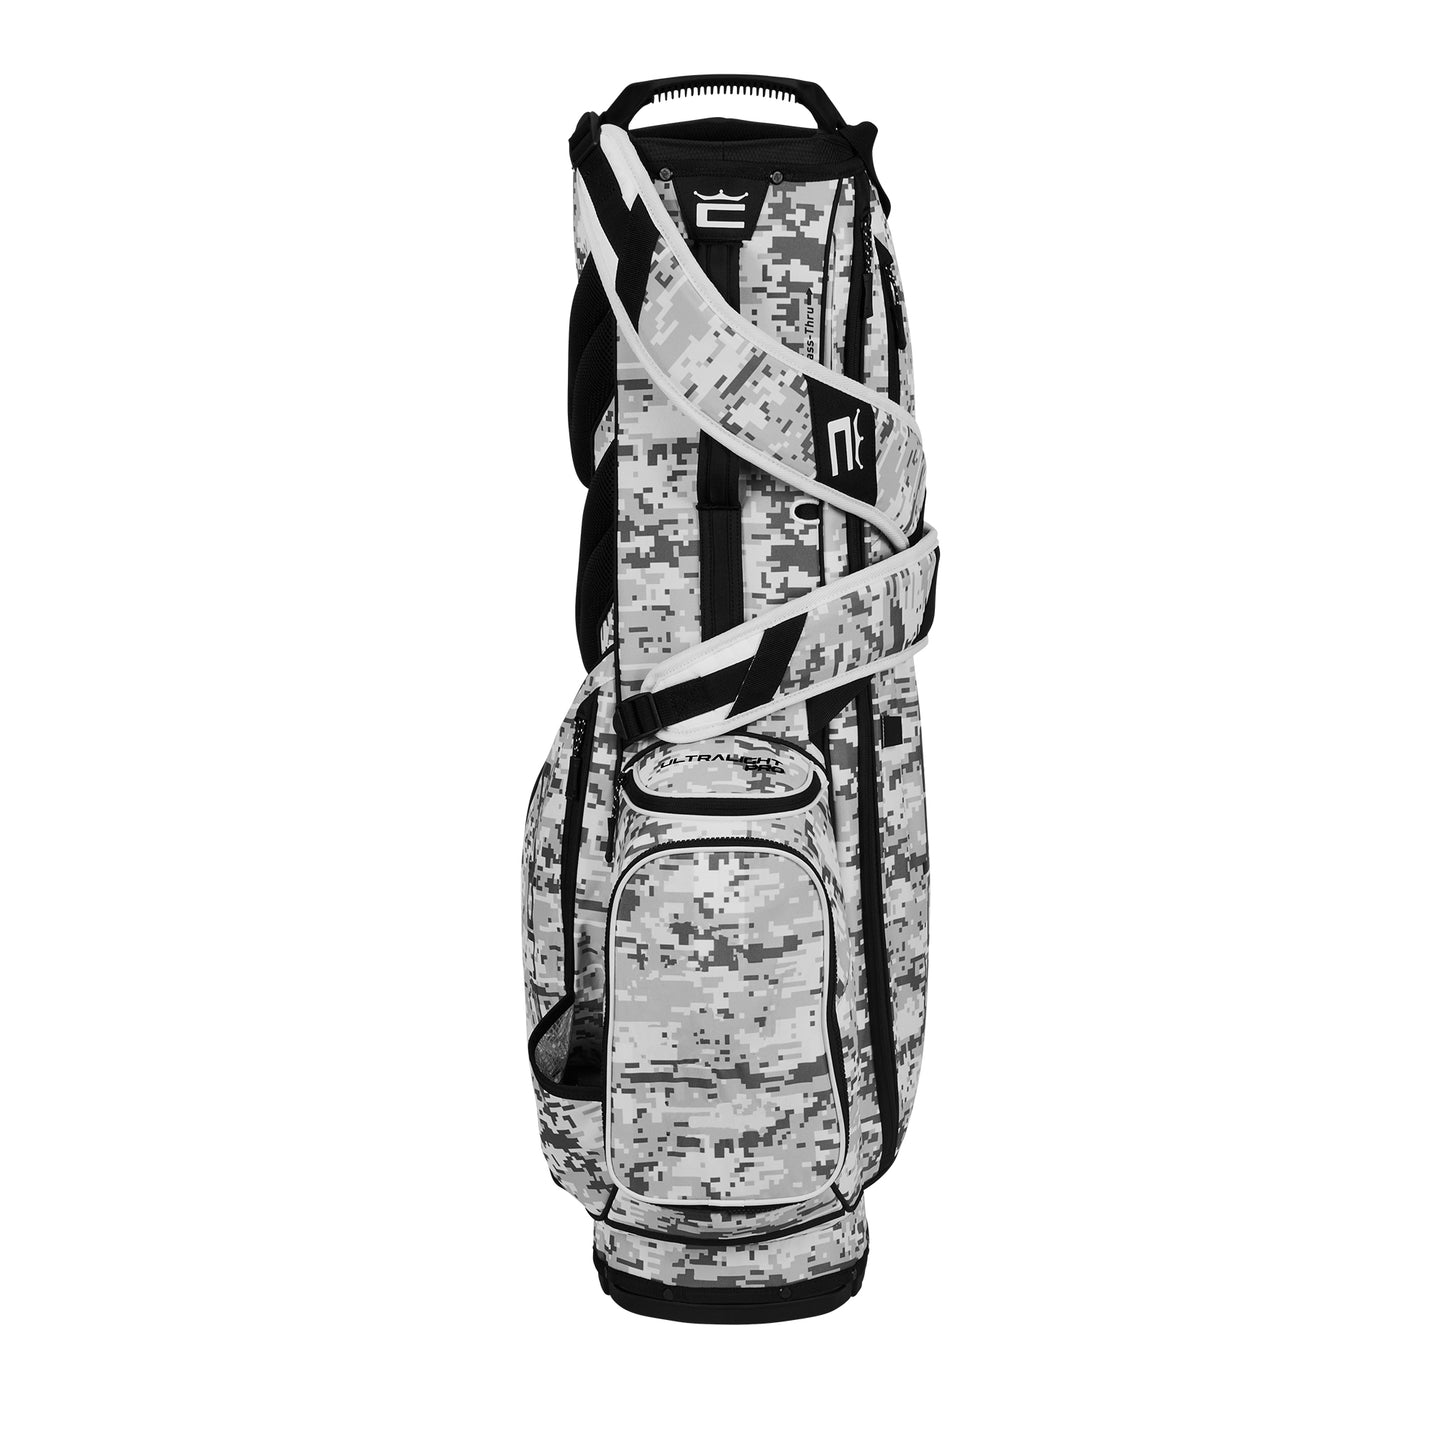 Ultralight Pro Stand Golf Bag – COBRA Golf